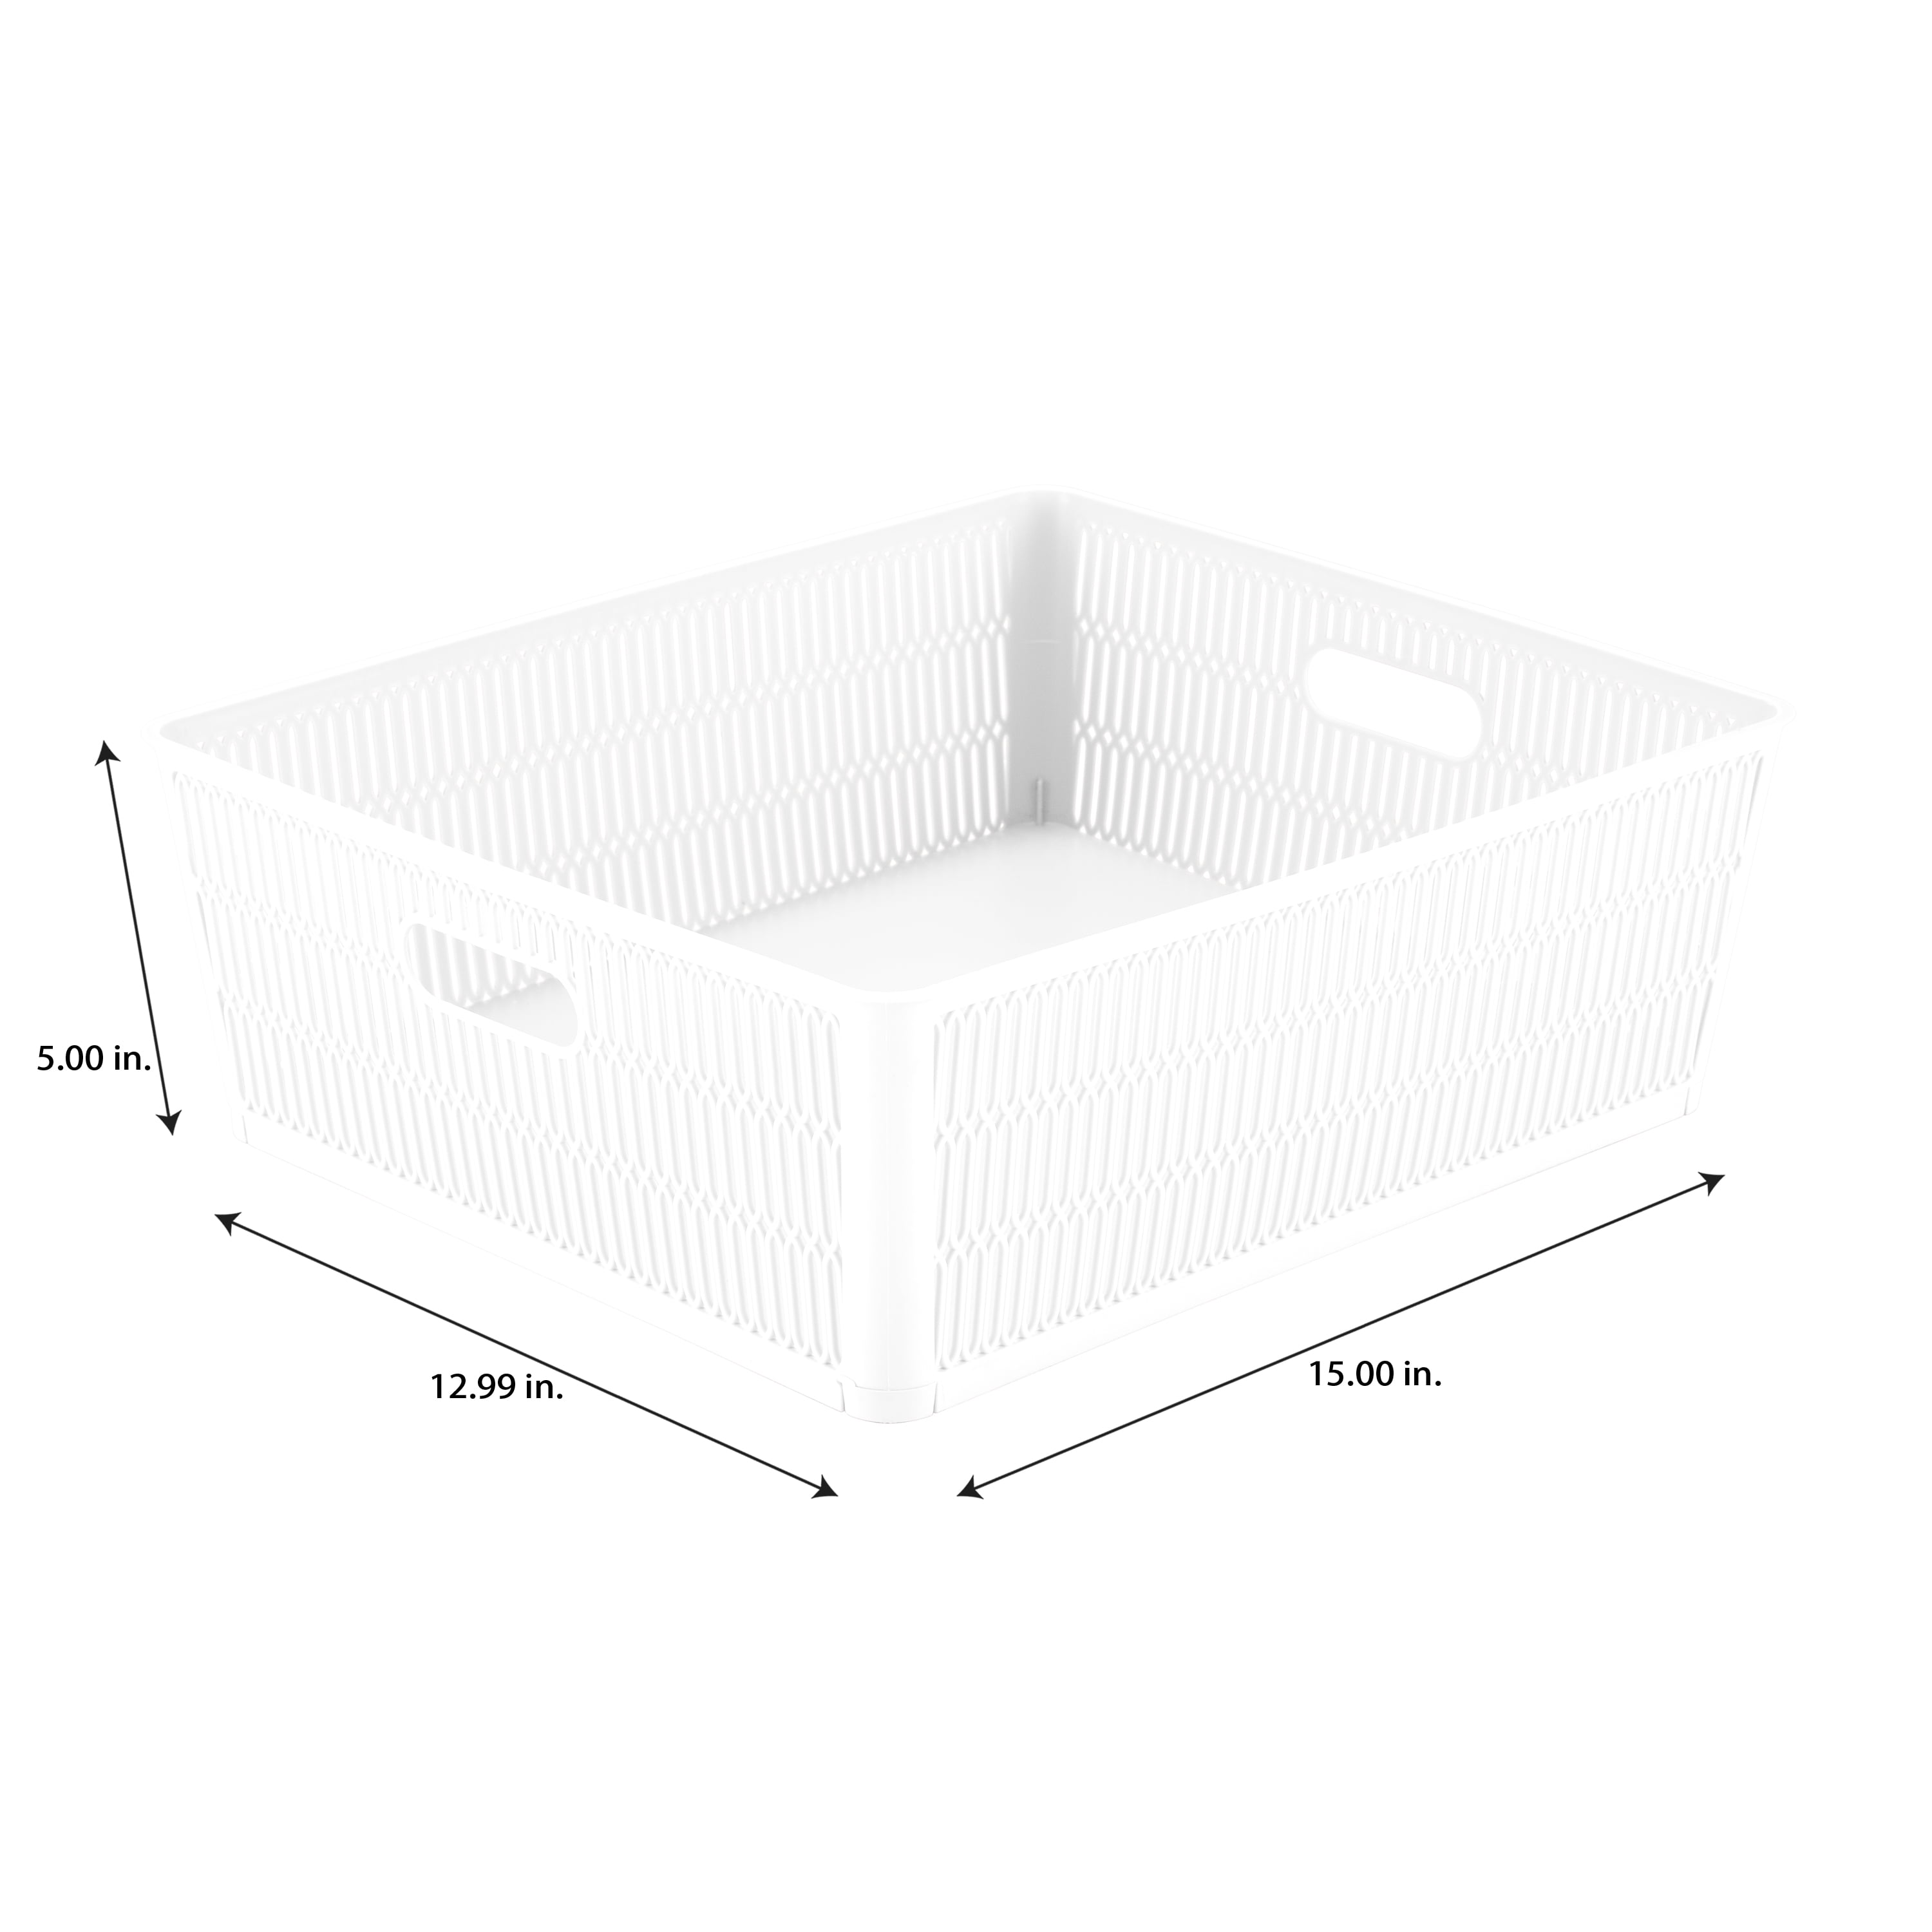 Eslite Plastic Storage Baskets,11.4X8.9X4.7,Pack of 4 (White)